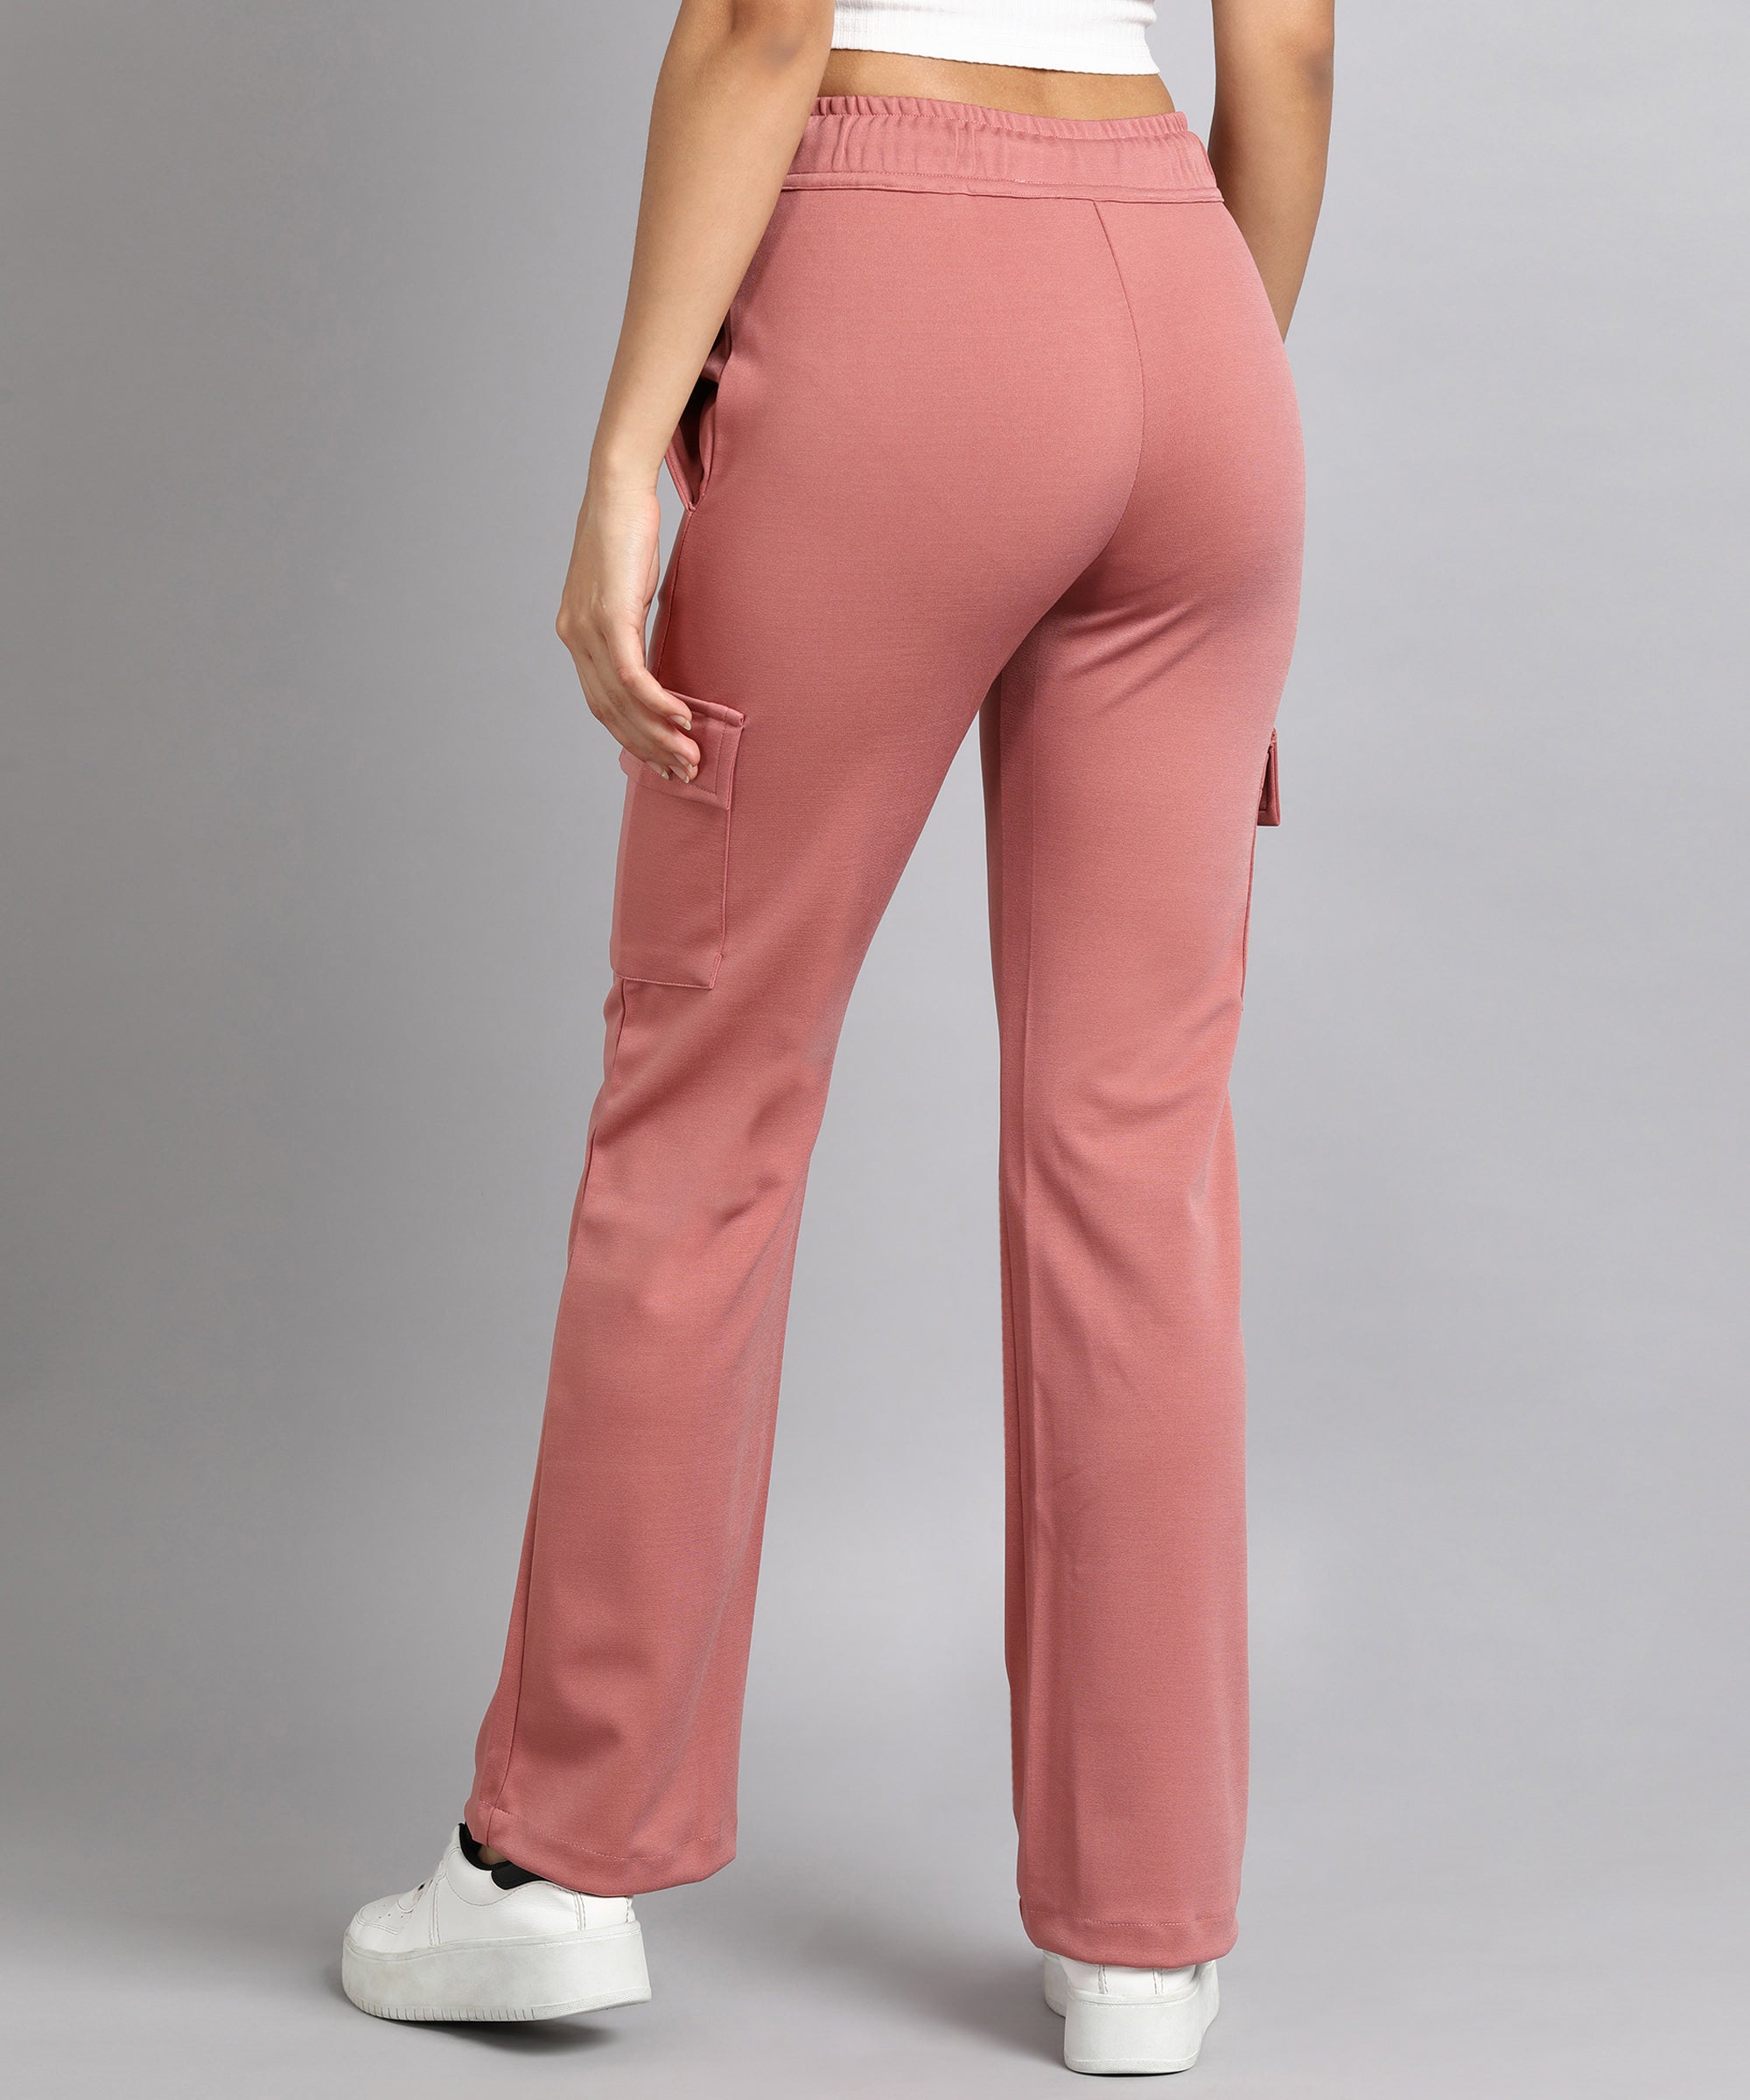 Women's Pink Pants & Trousers - Shop Online Now | RW&CO. Canada